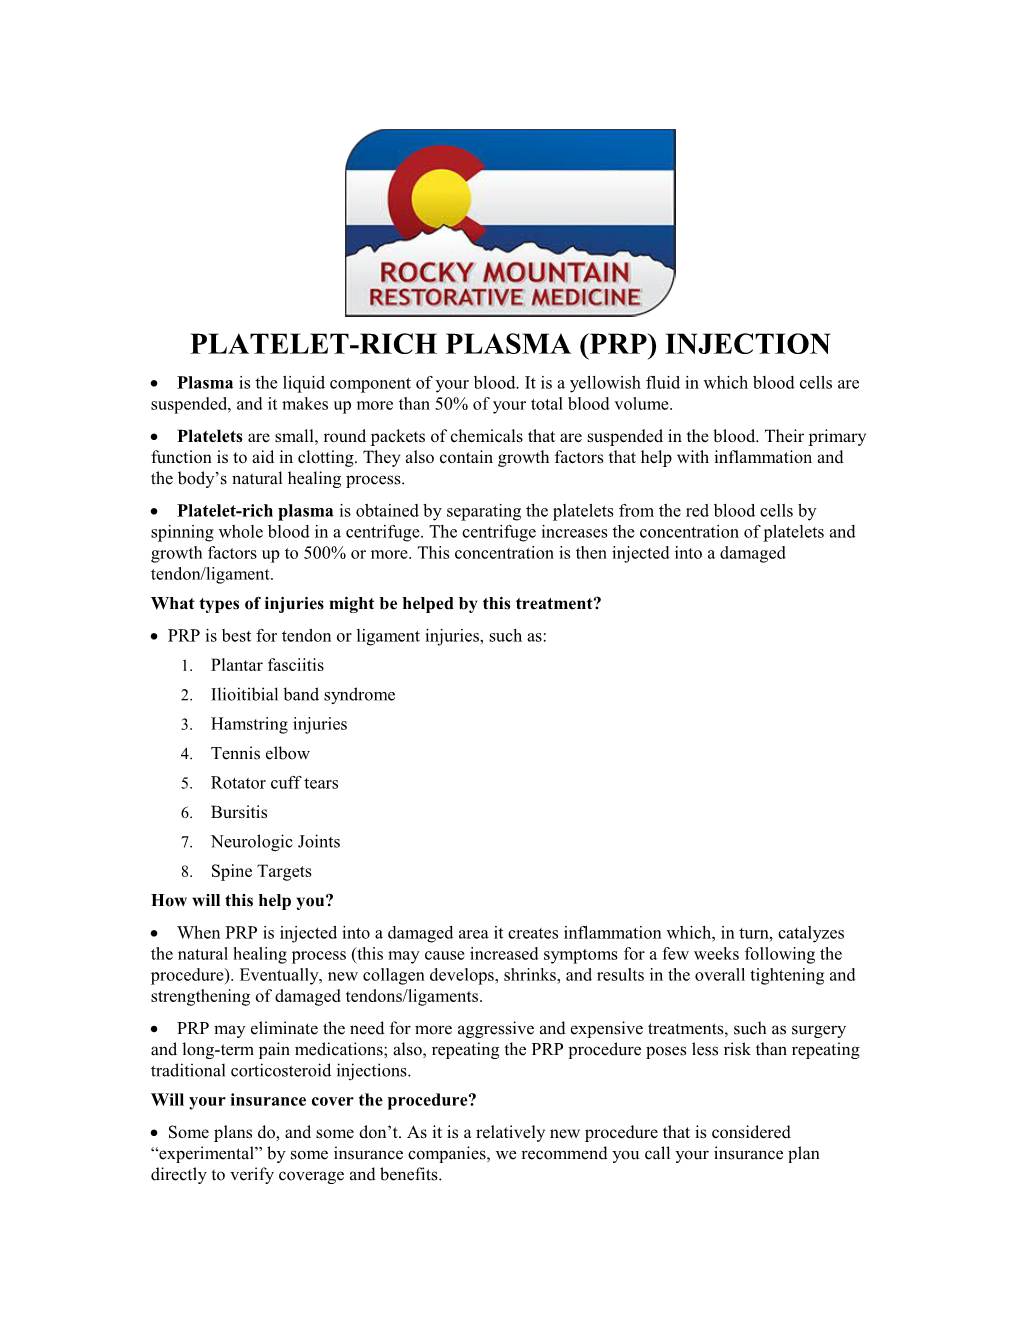 Platelet-Rich Plasma (Prp) Injection